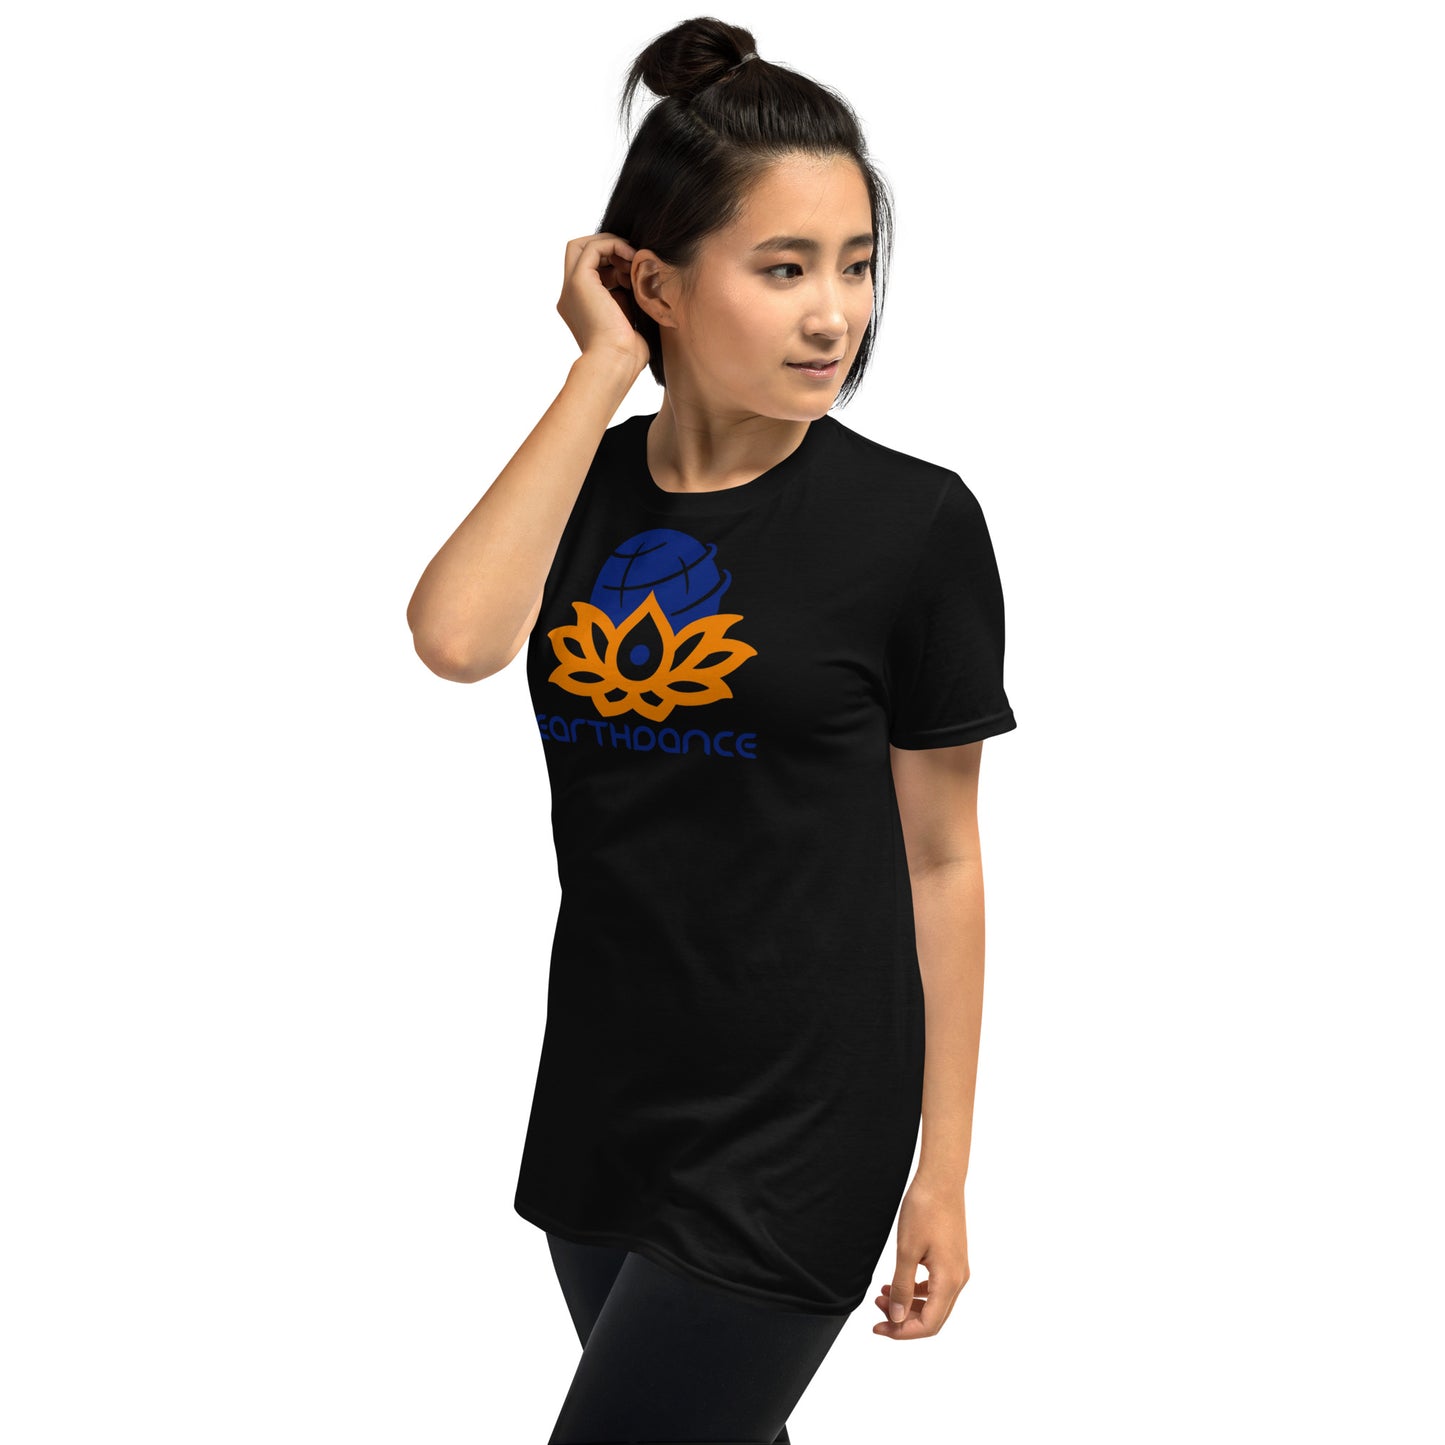 Earthdance 2023 - AuraShine v2 - Limited Edition - Short-Sleeve Unisex T-Shirt